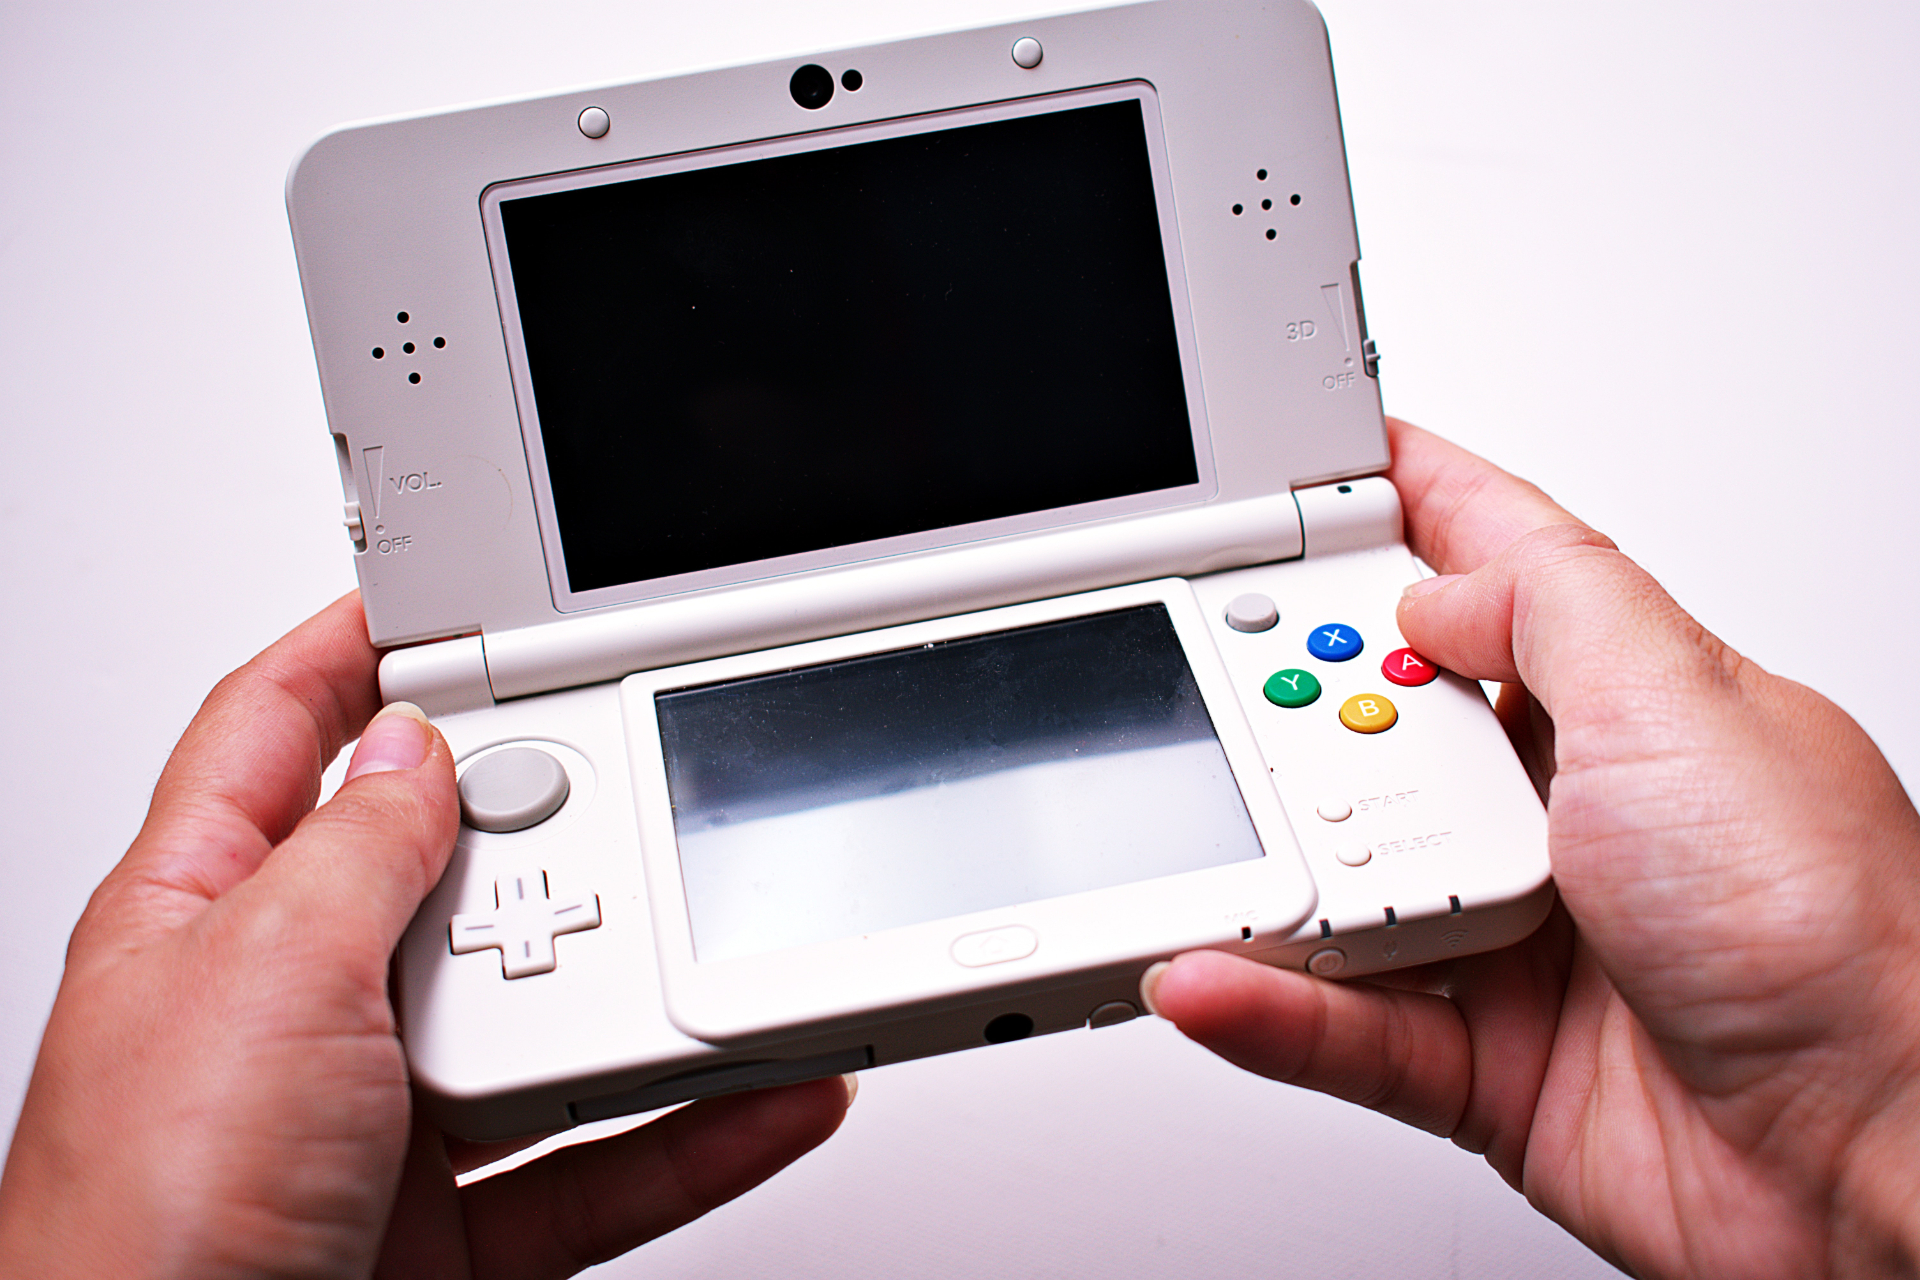 Zelda Game & Watch review: Nintendo's itty-bitty Link handheld - Video -  CNET